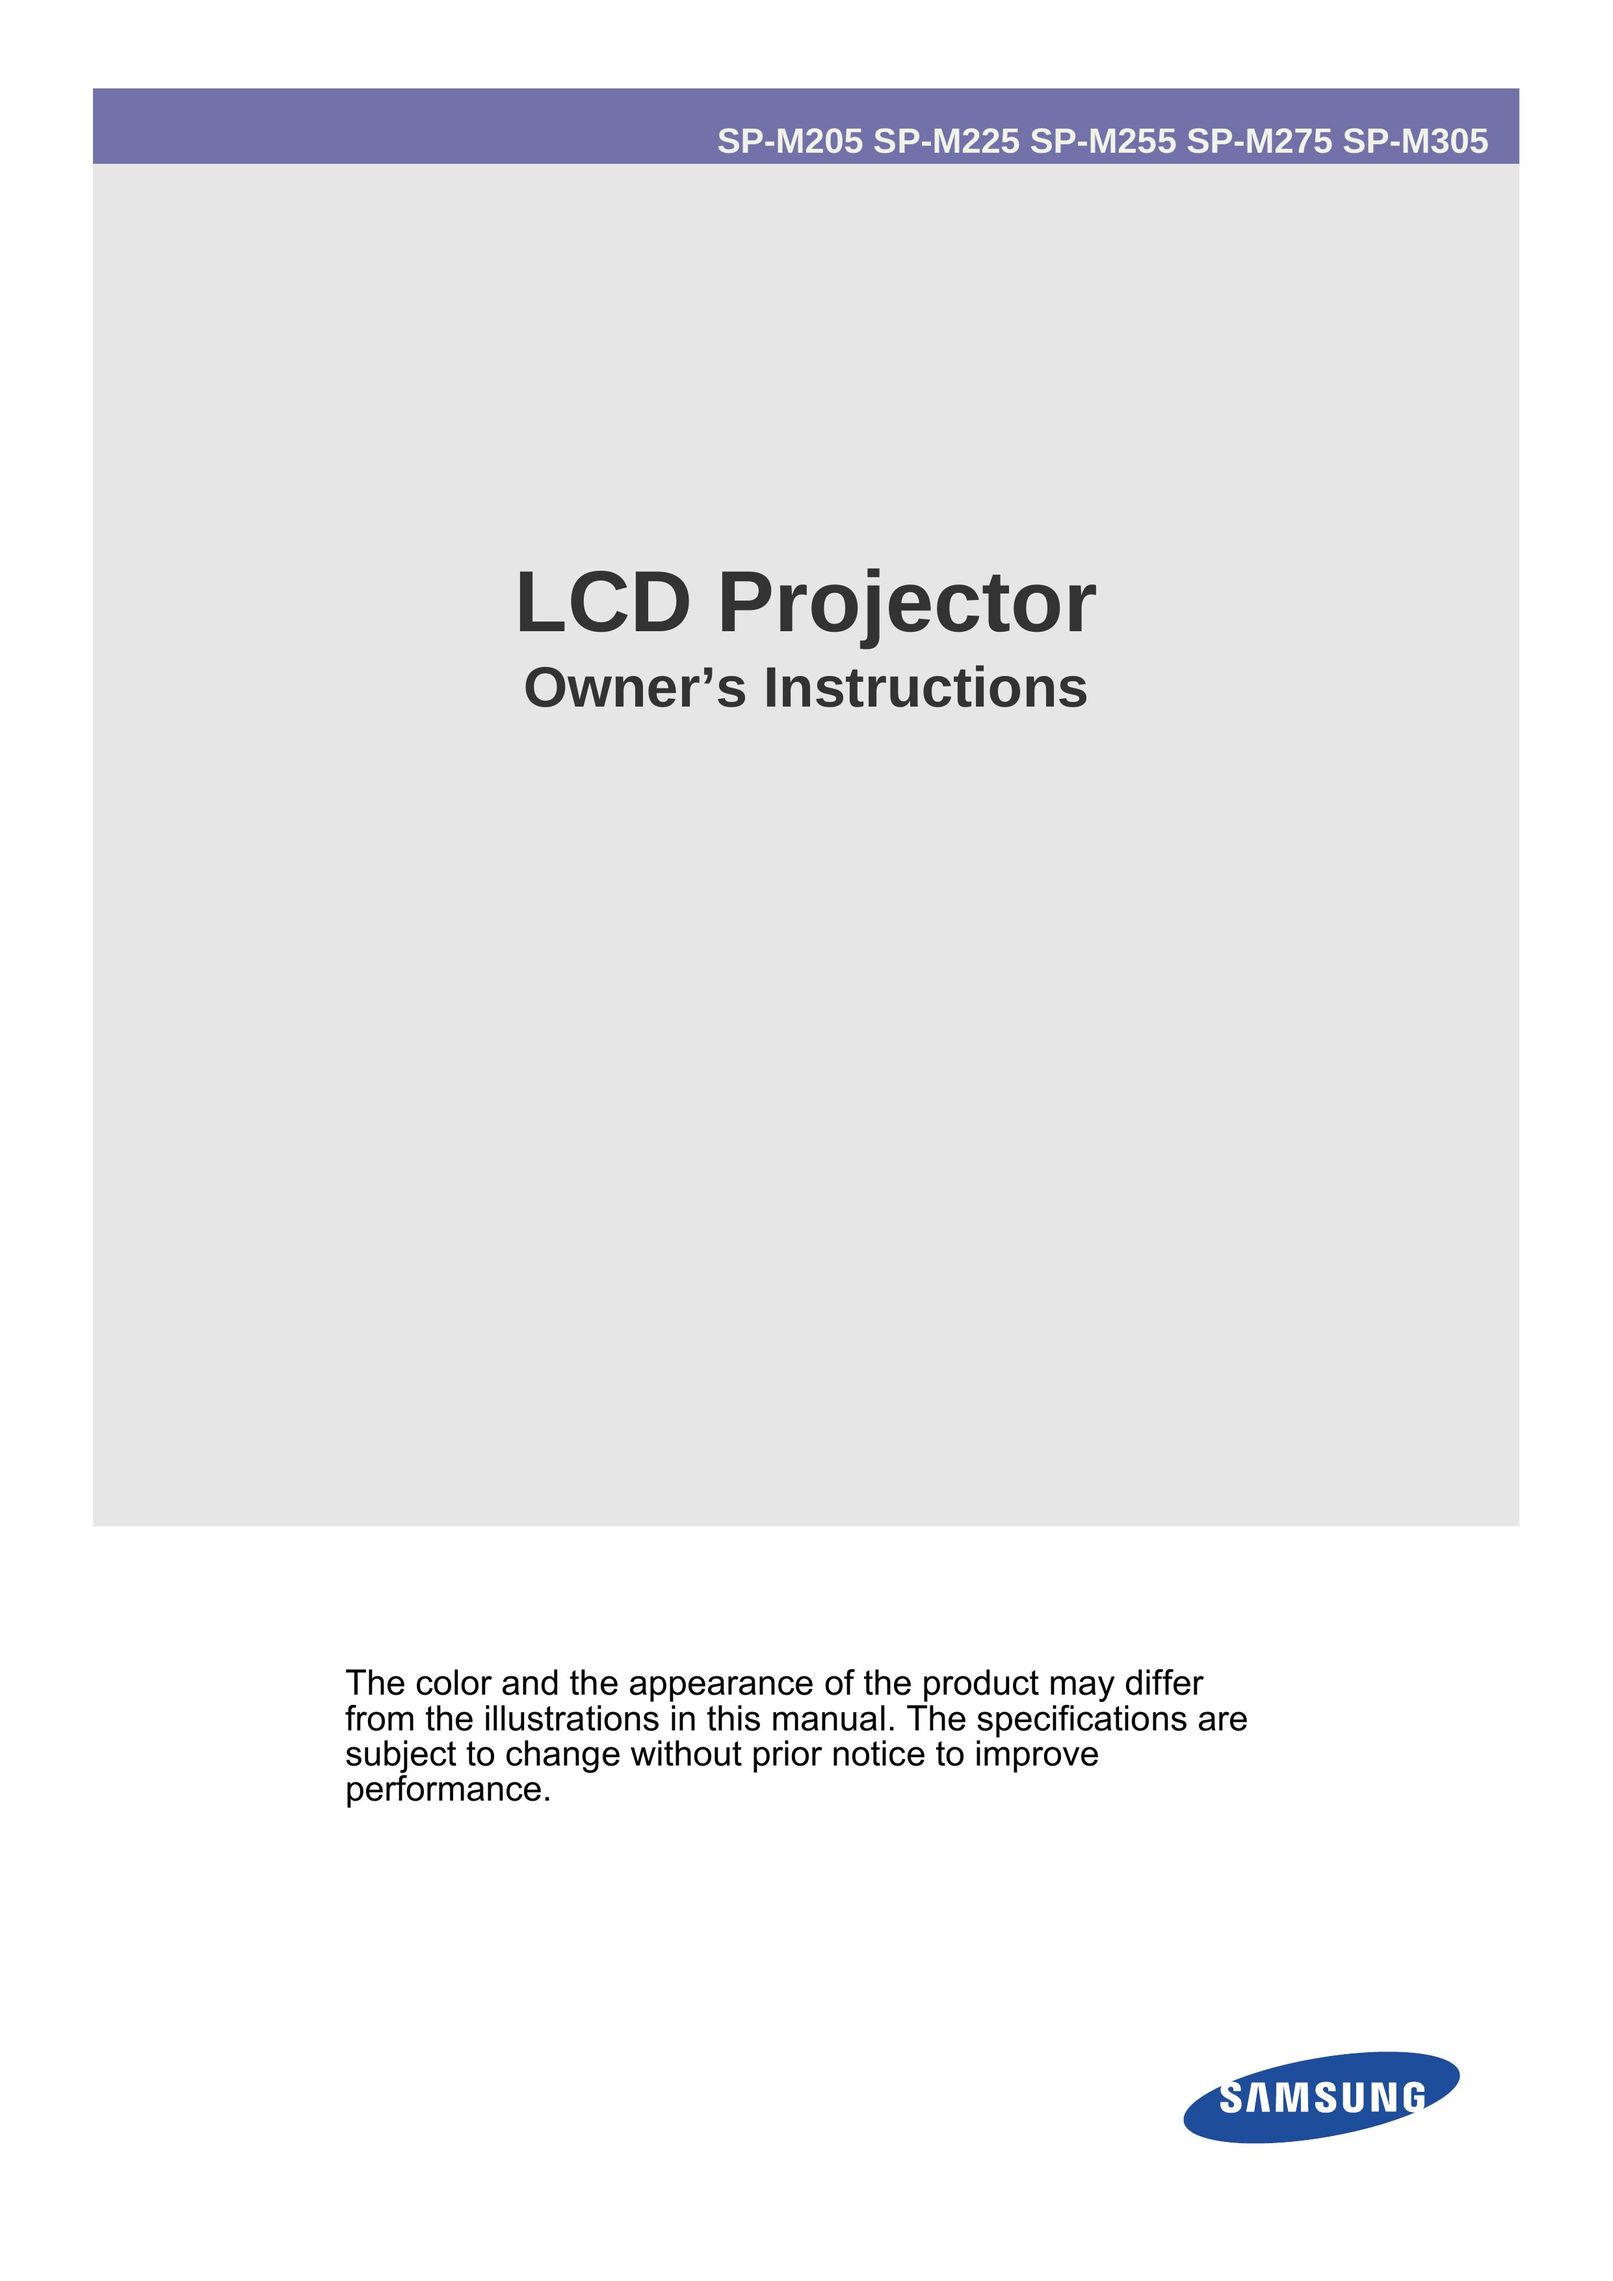 Samsung SP-M275 Projector User Manual